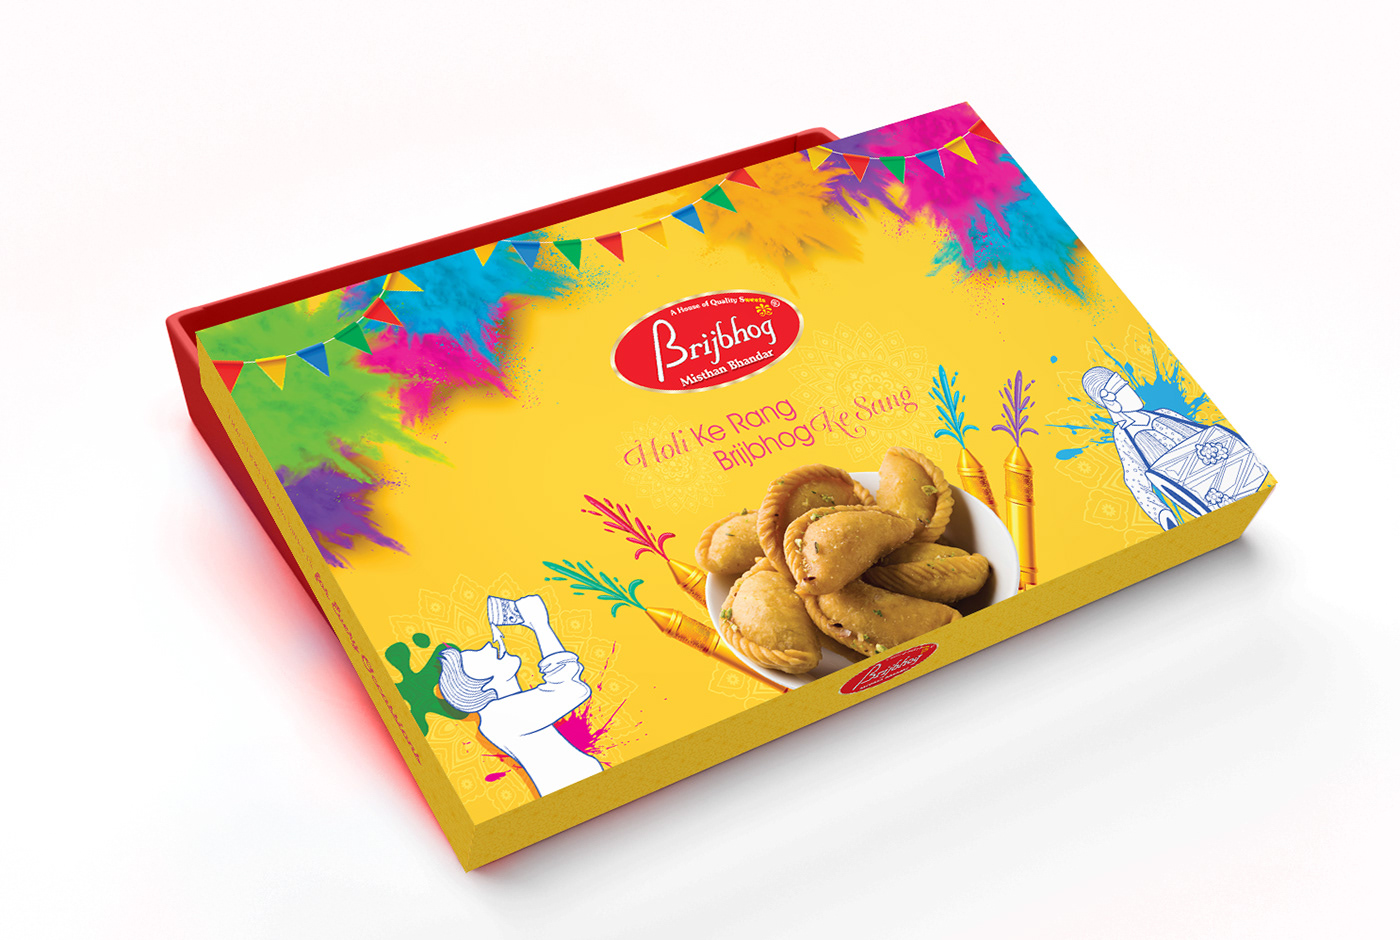 mithai boxes Packaging Sweets Haldiram Holi Design im sweets